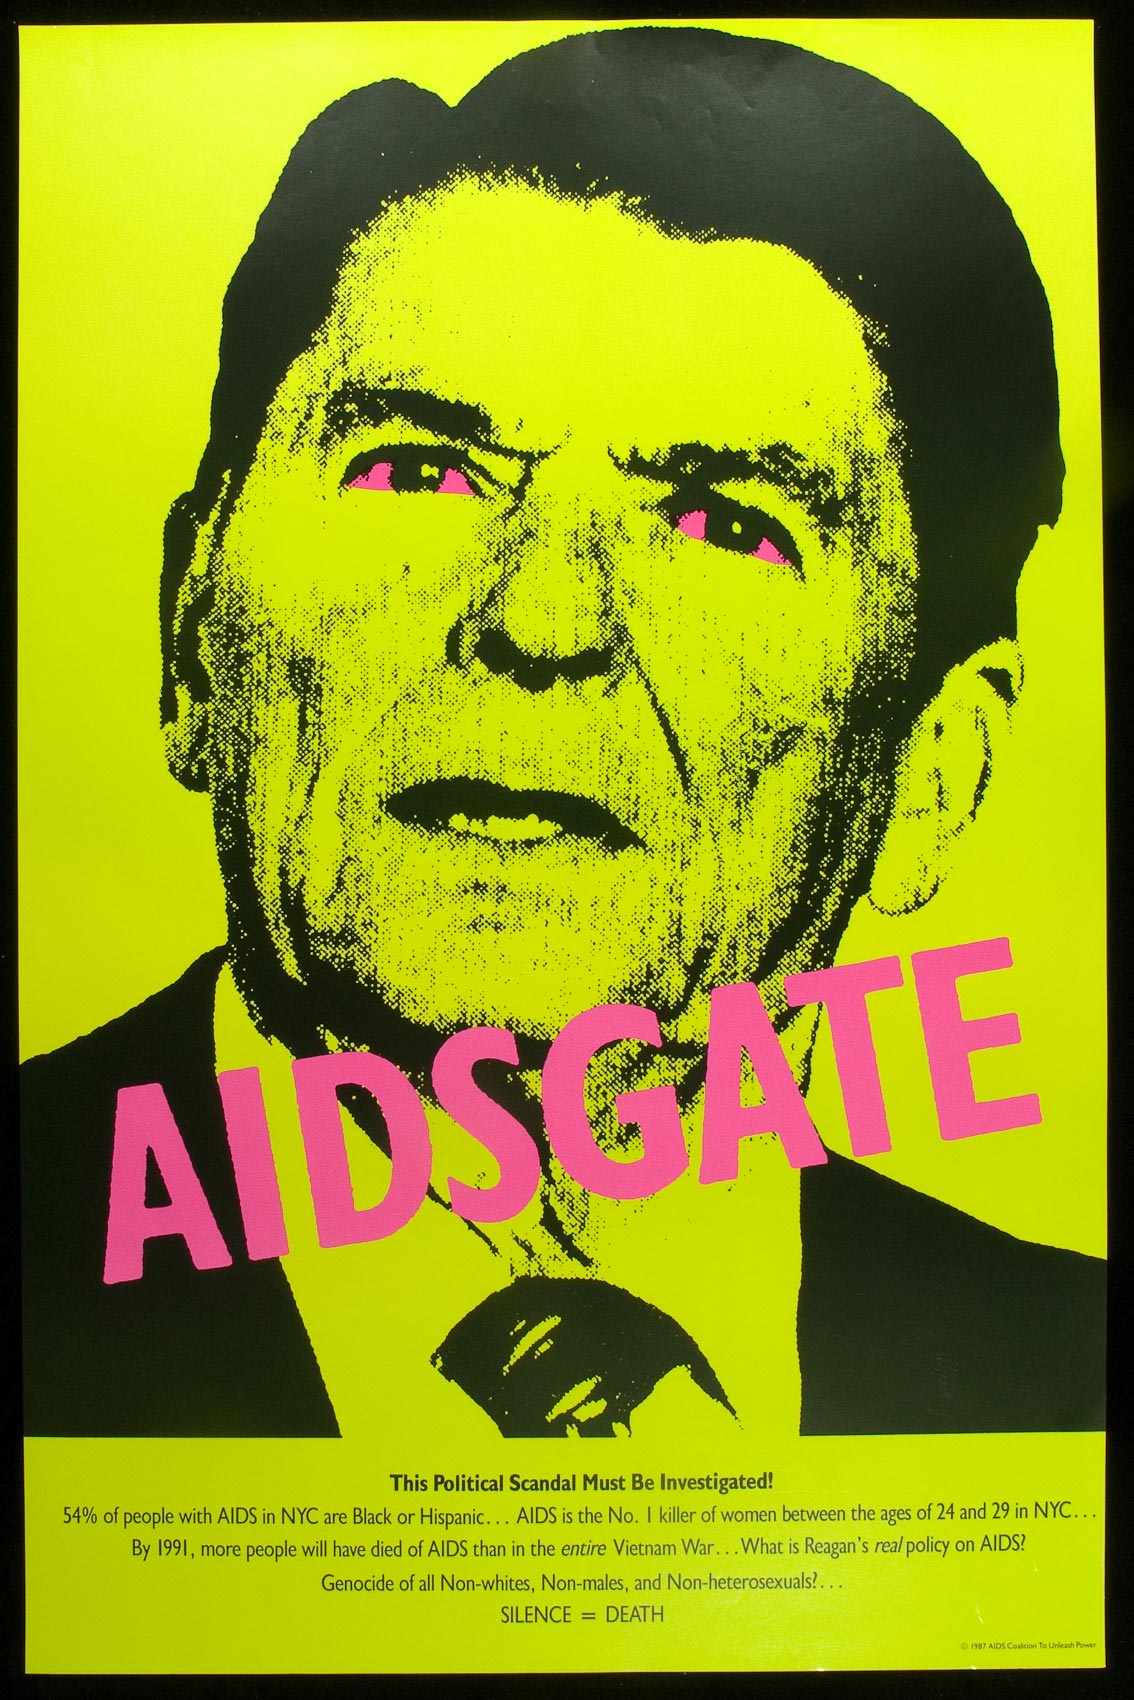 1987 AIDS Education Poster - Reagan